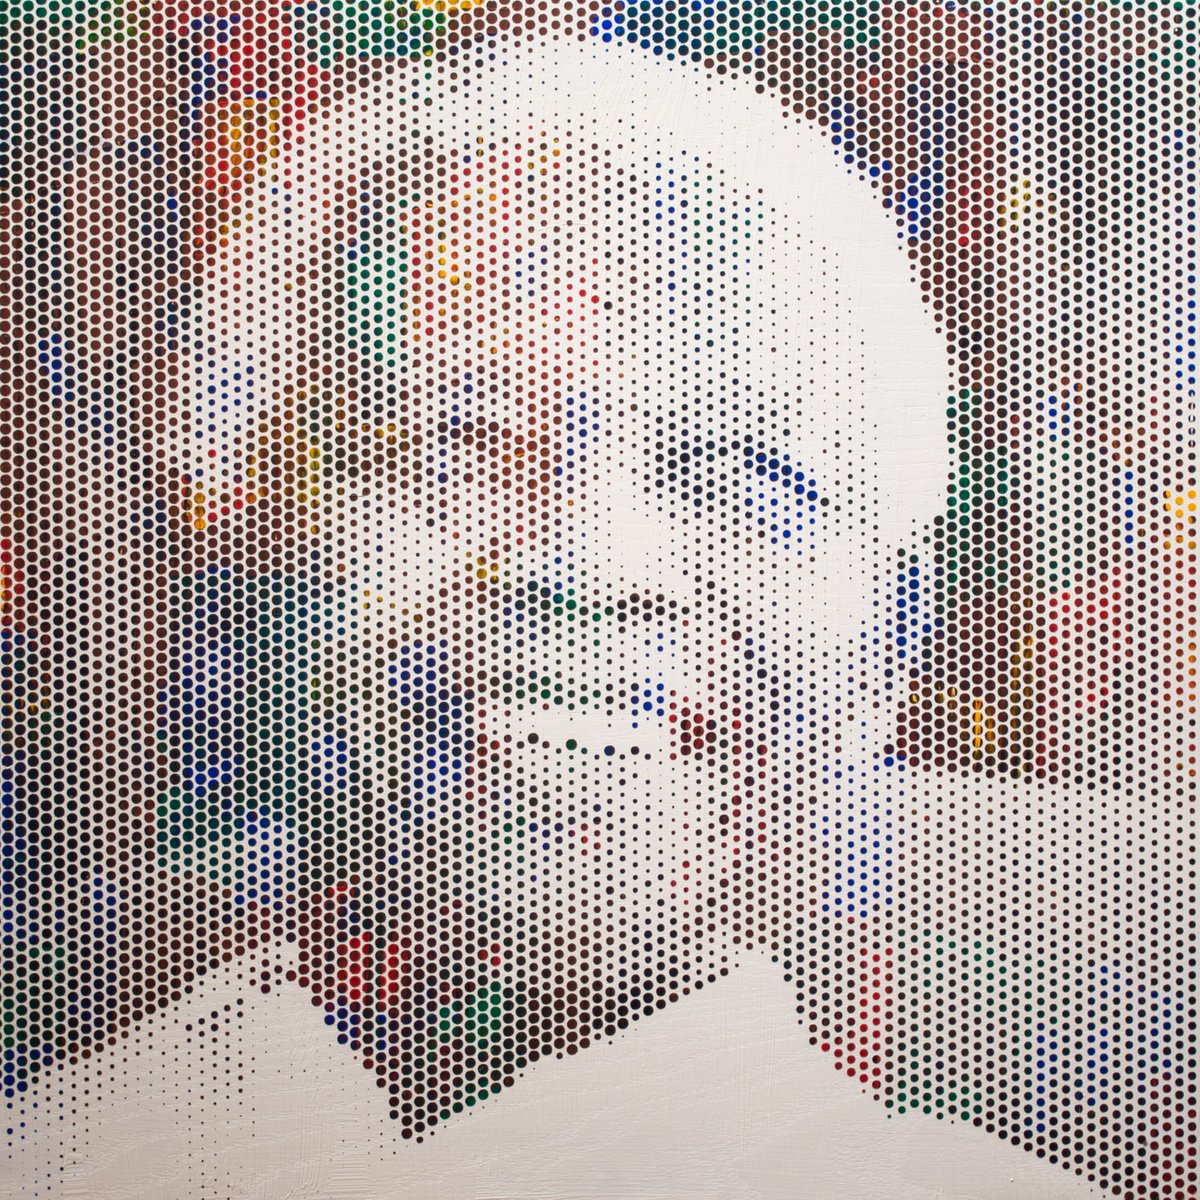 Nelson Mandela I by Sean Christopher Ward